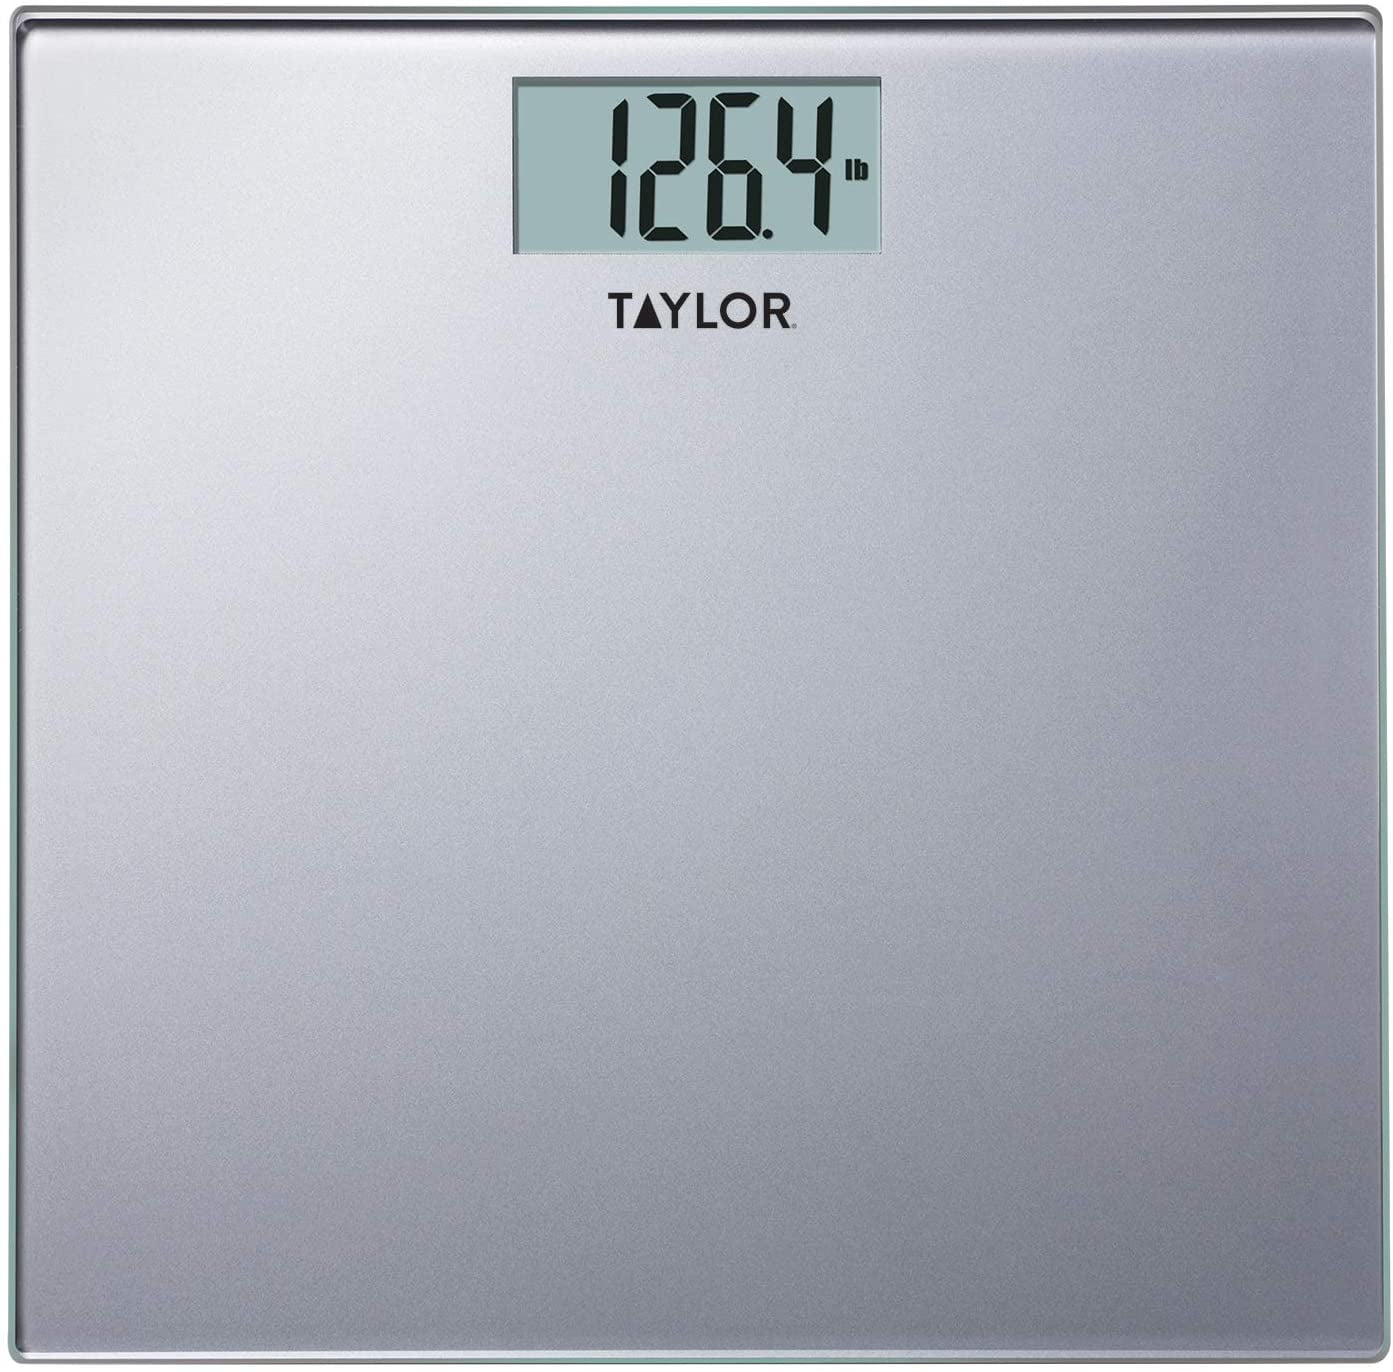 Taylor Digital 400 Lb. Glass Bath Scale, Clear - Parker's Building Supply